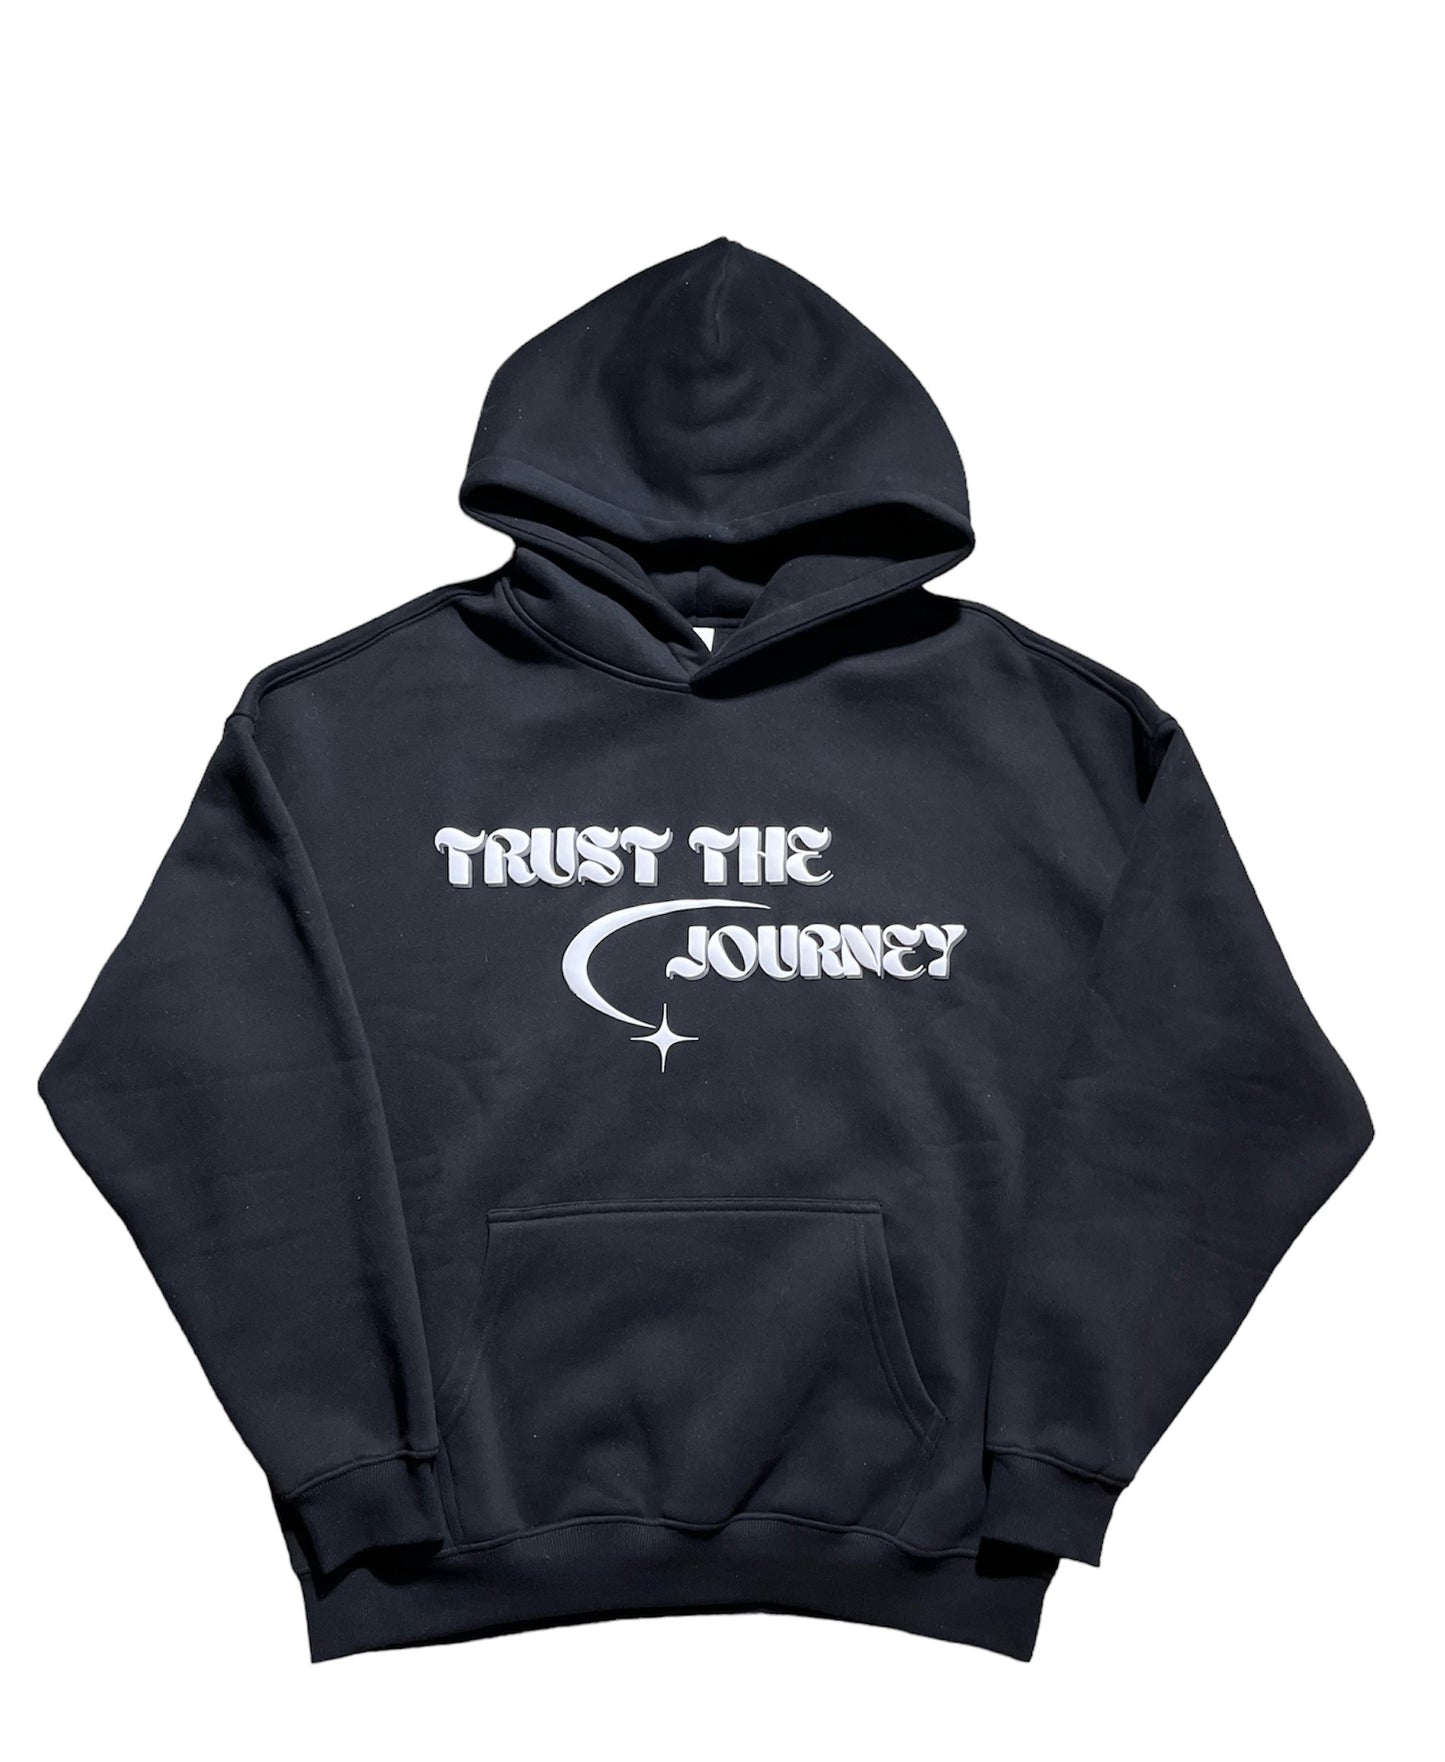 Black "Trust The Journey" Hoodie